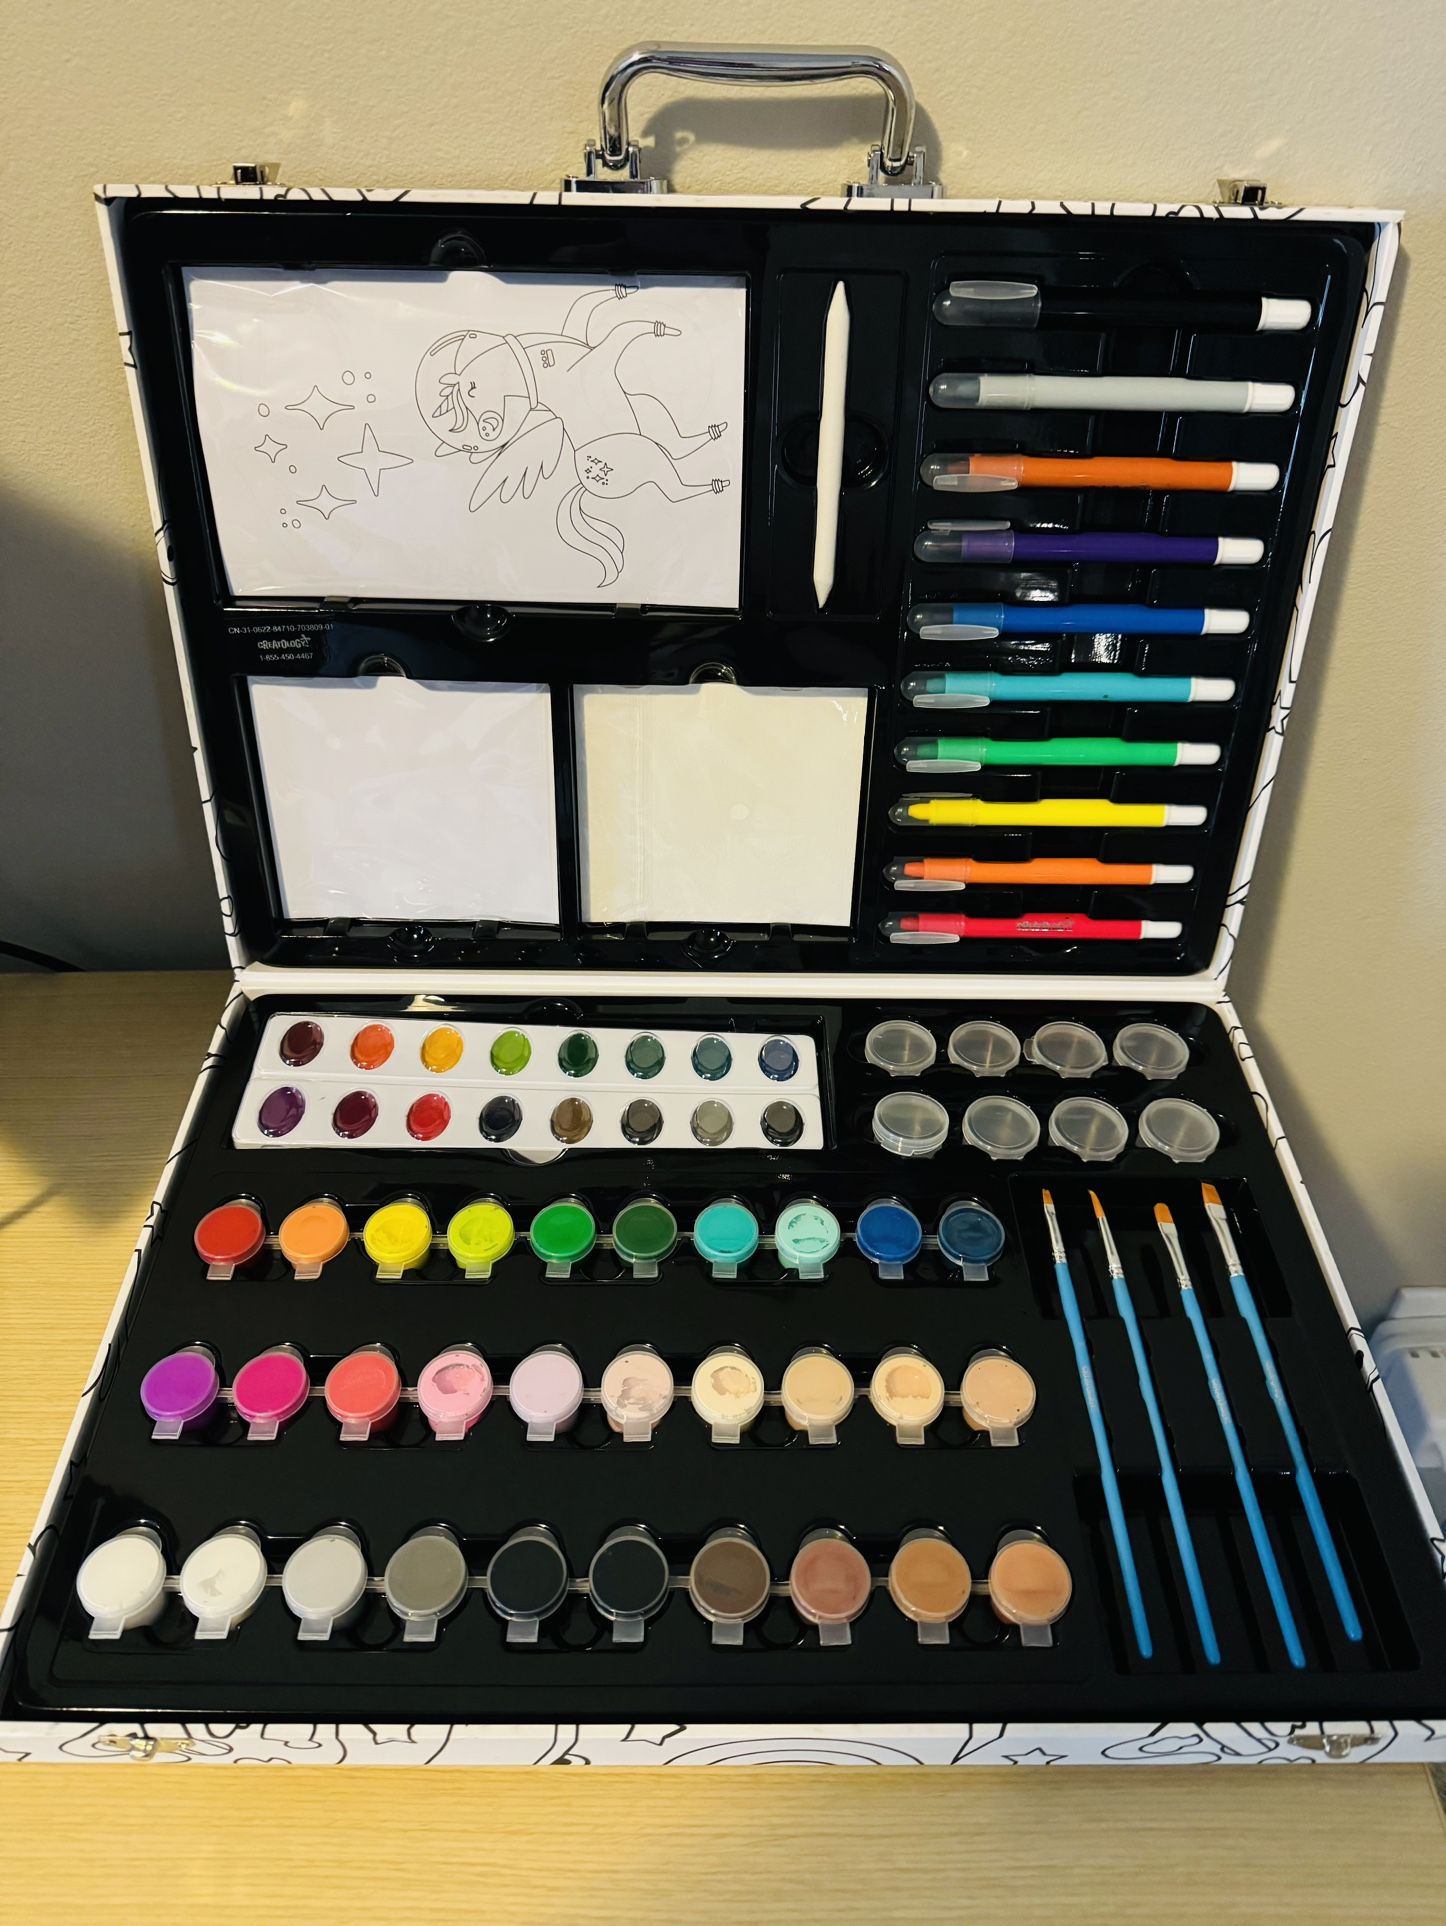 Deluxe Paint Studio Kit by Creatology